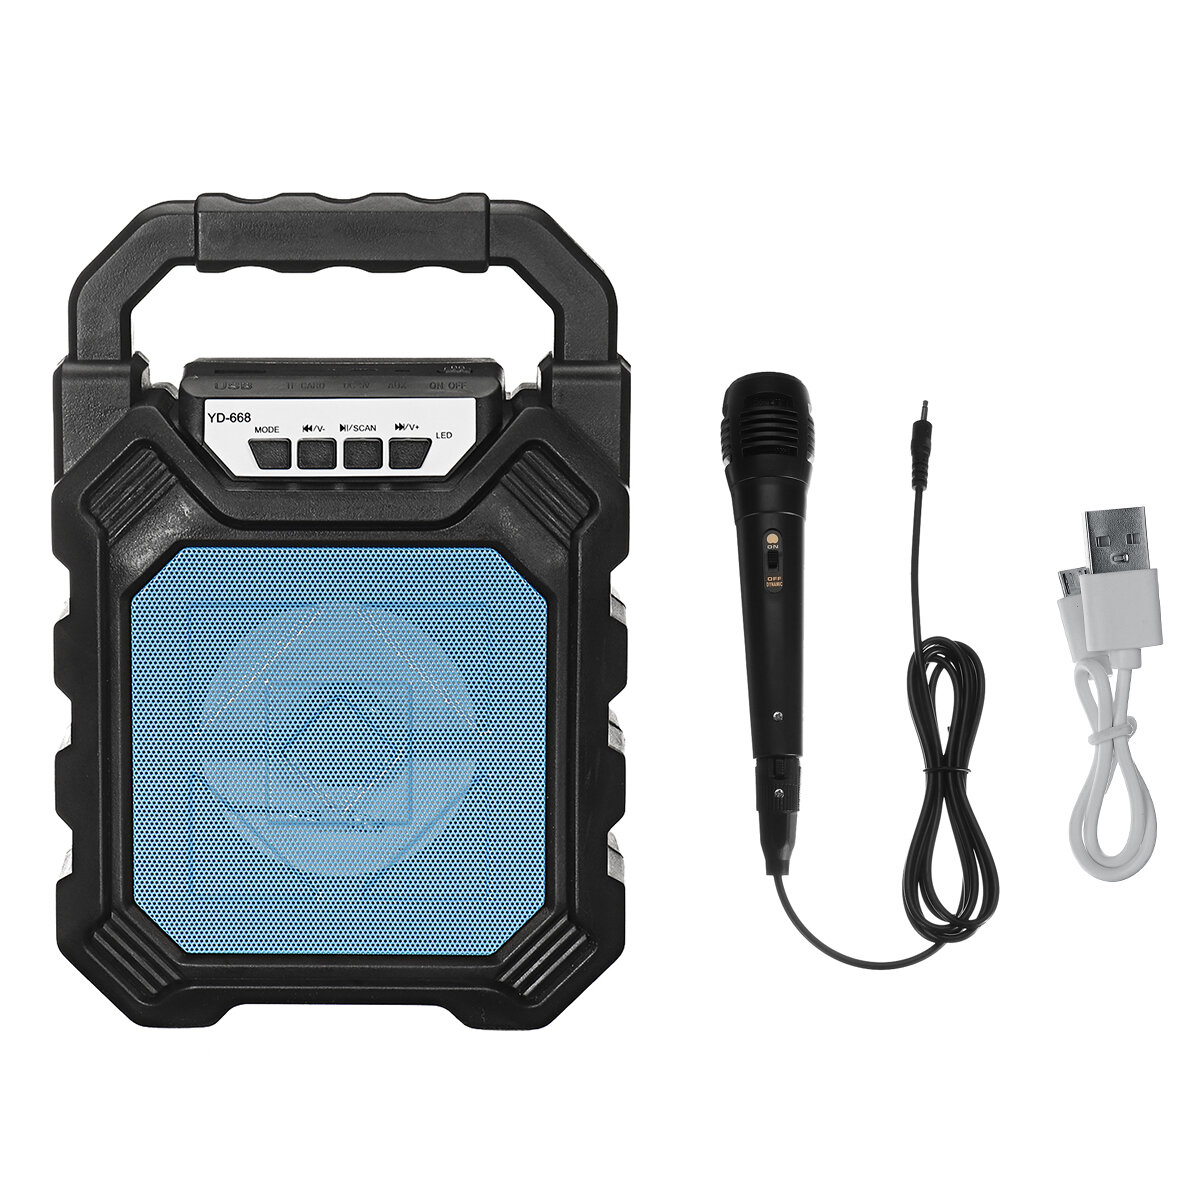 Portátil al aire libre LED Inalámbrico Bluetooth Altavoz Estéreo recargable Radio con Micrófono Reproductor de música